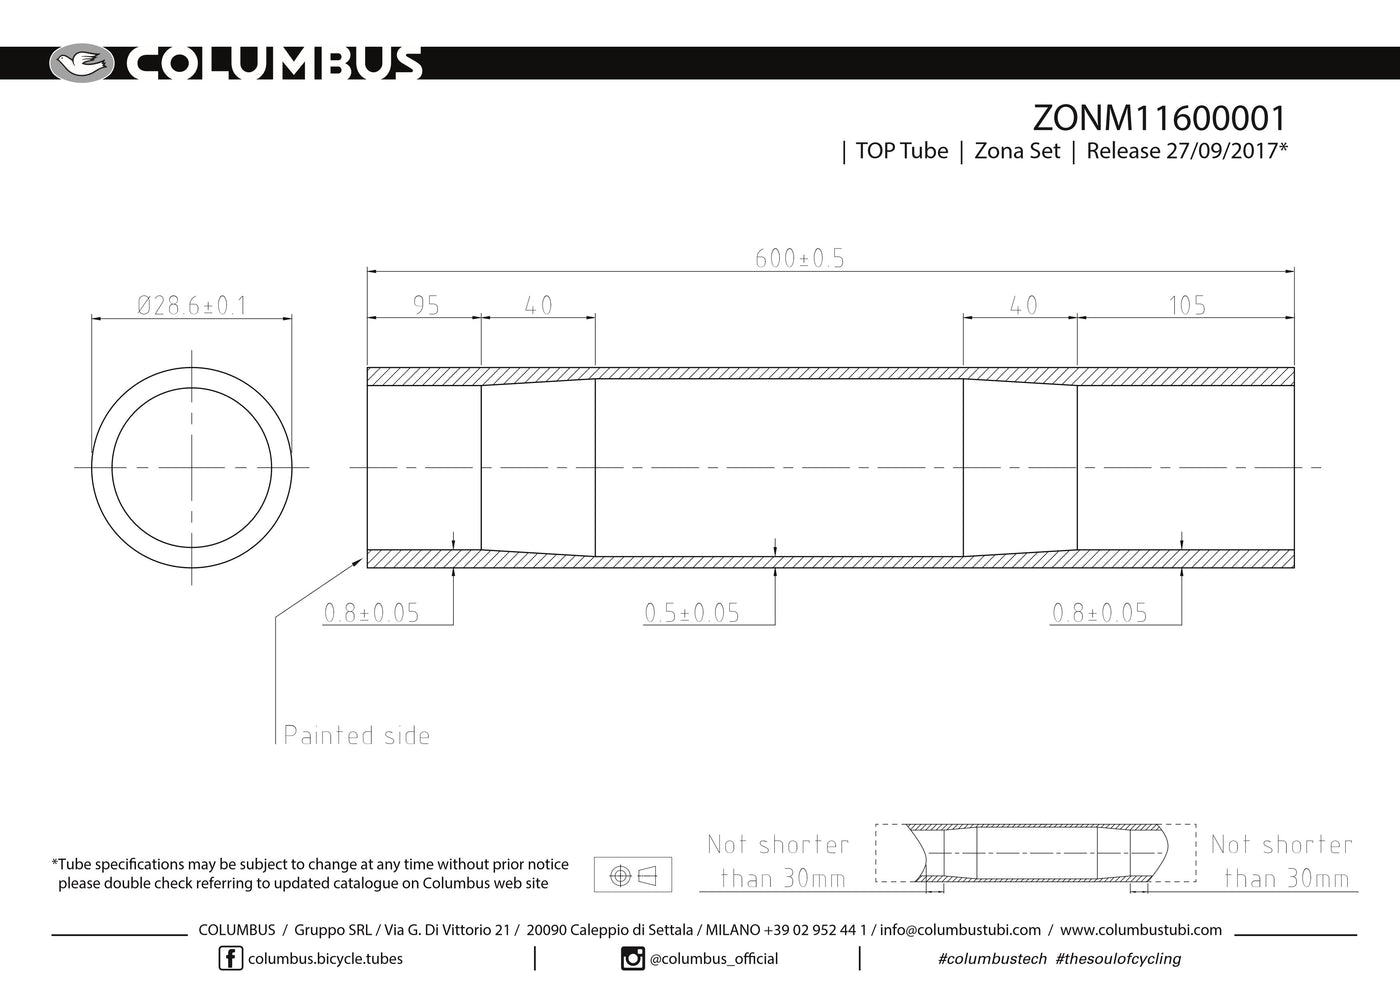 ZONM11600001 - Columbus Tubing Zona top tube - 28.6 diameter - .8/.5/.8 wall thickness. Length = 600